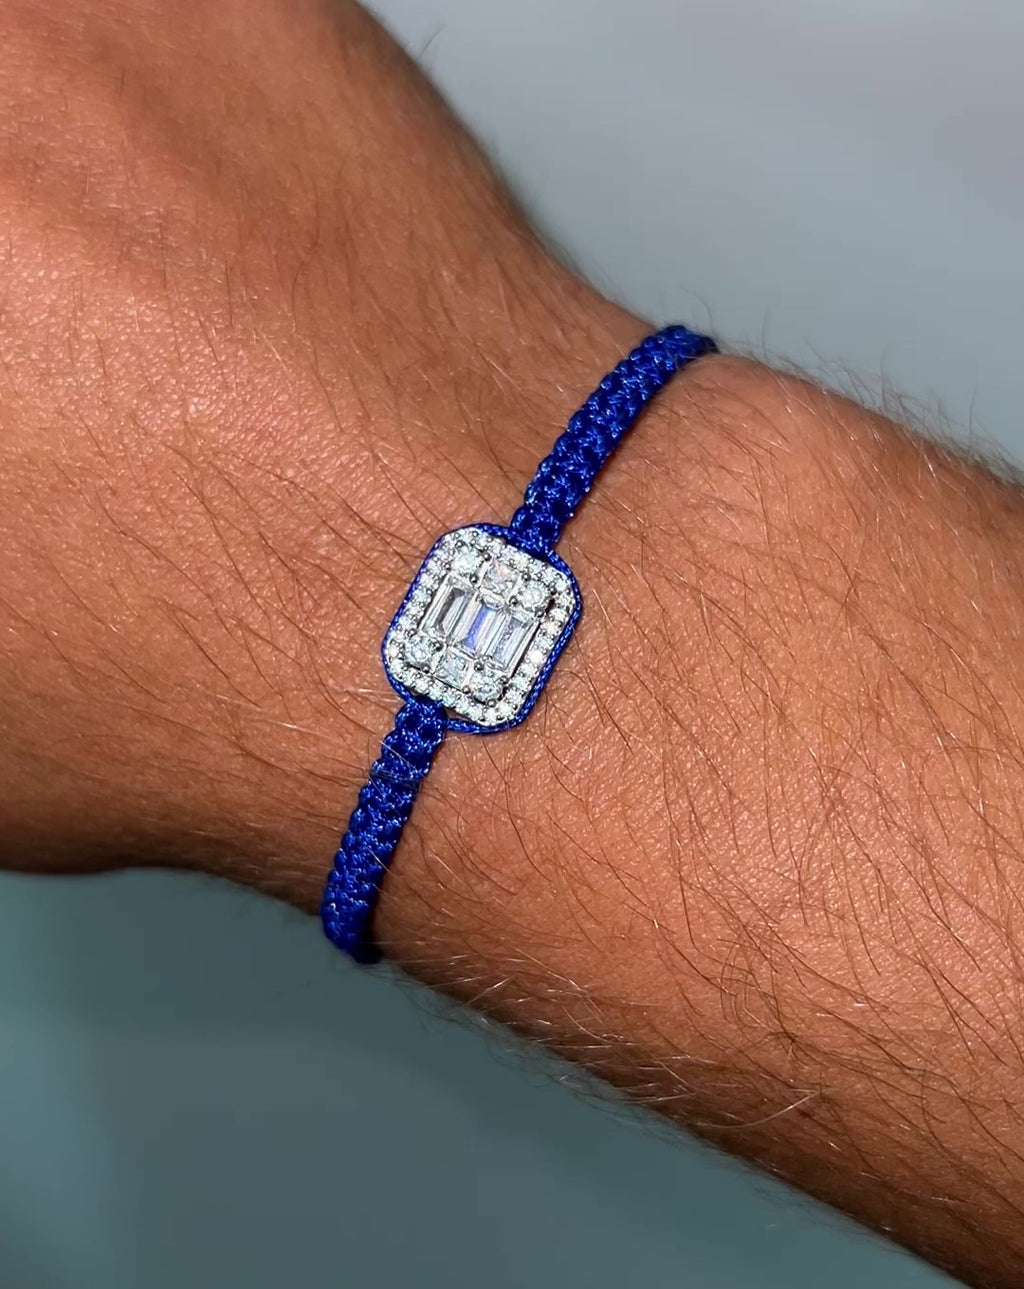 Video showing the Radiance bracelet blue 925 sterling silver Emils Jewellery